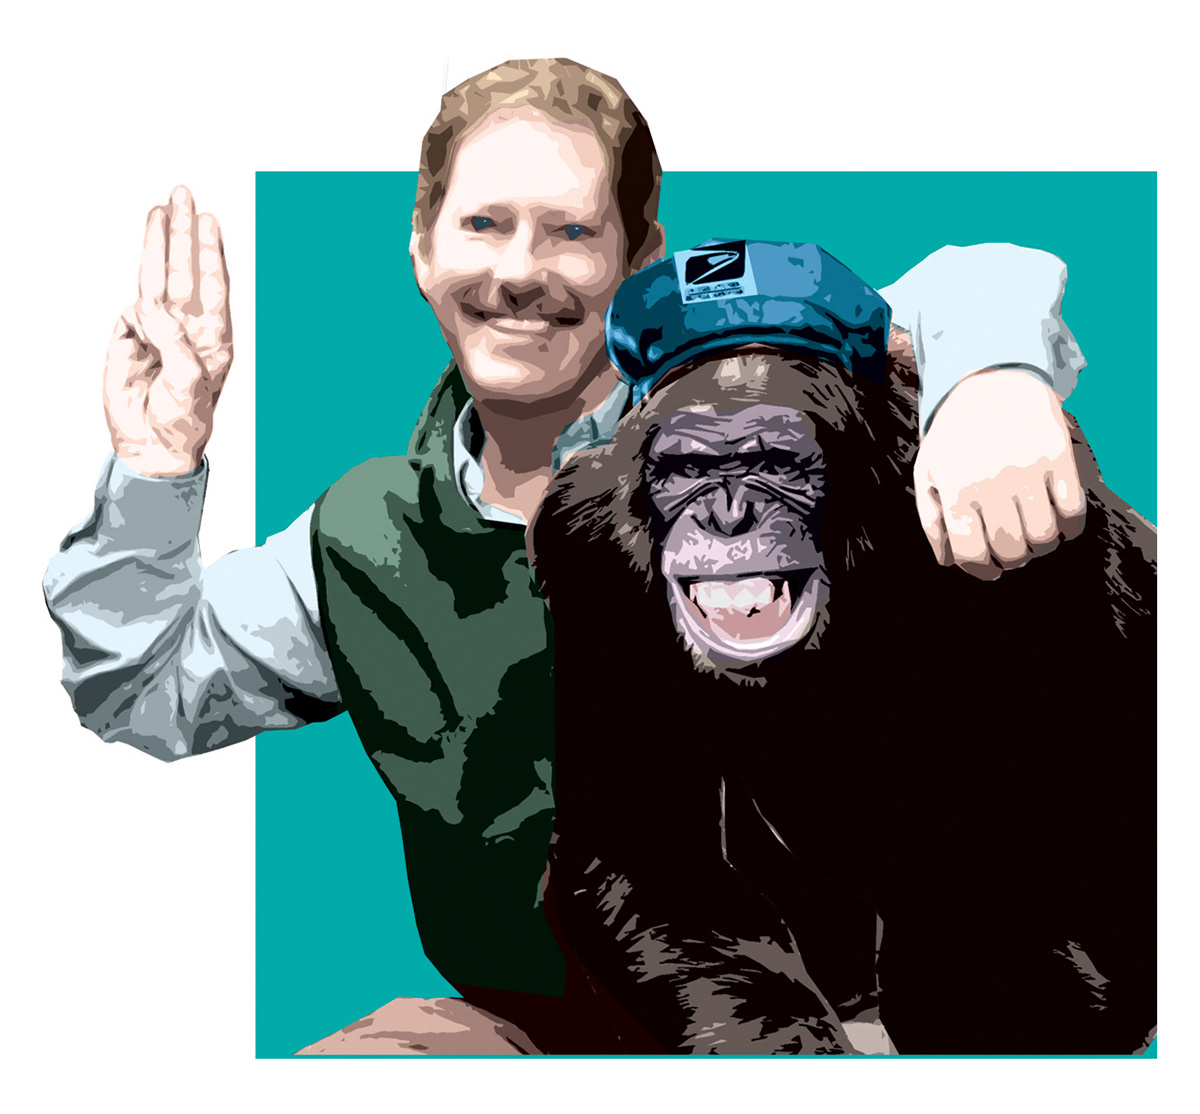 logan rogers loganrogers.net mailchimp chimp with mailman chimp with cap Newsletter Art scout's honor